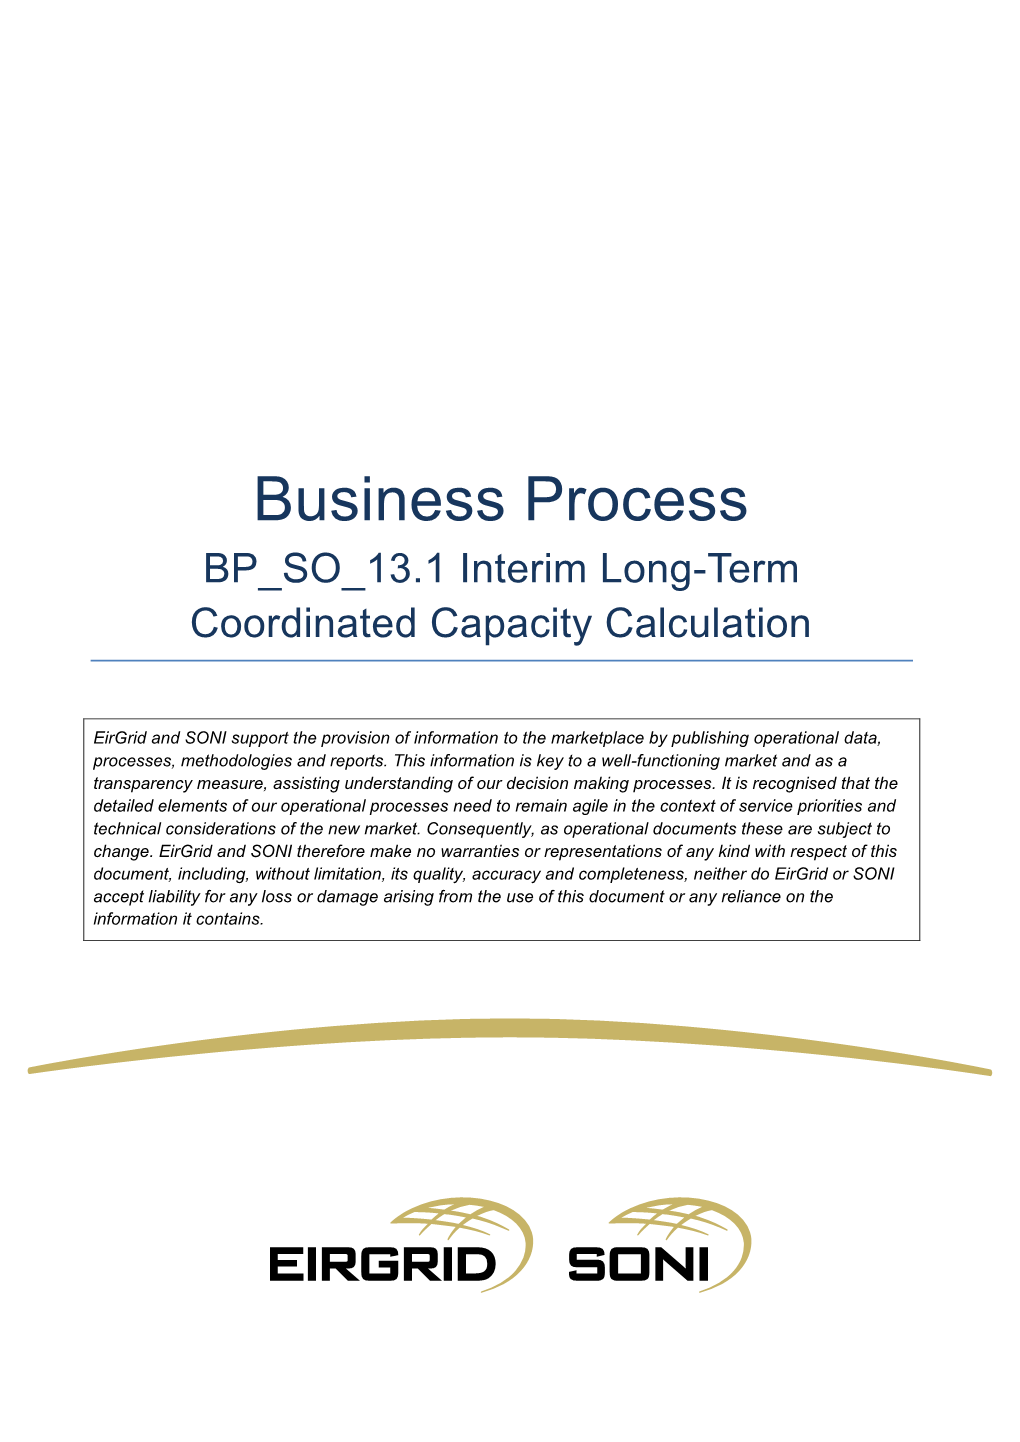 BP SO 13.1 Interim Long-Term Coordinated Capacity Calculation